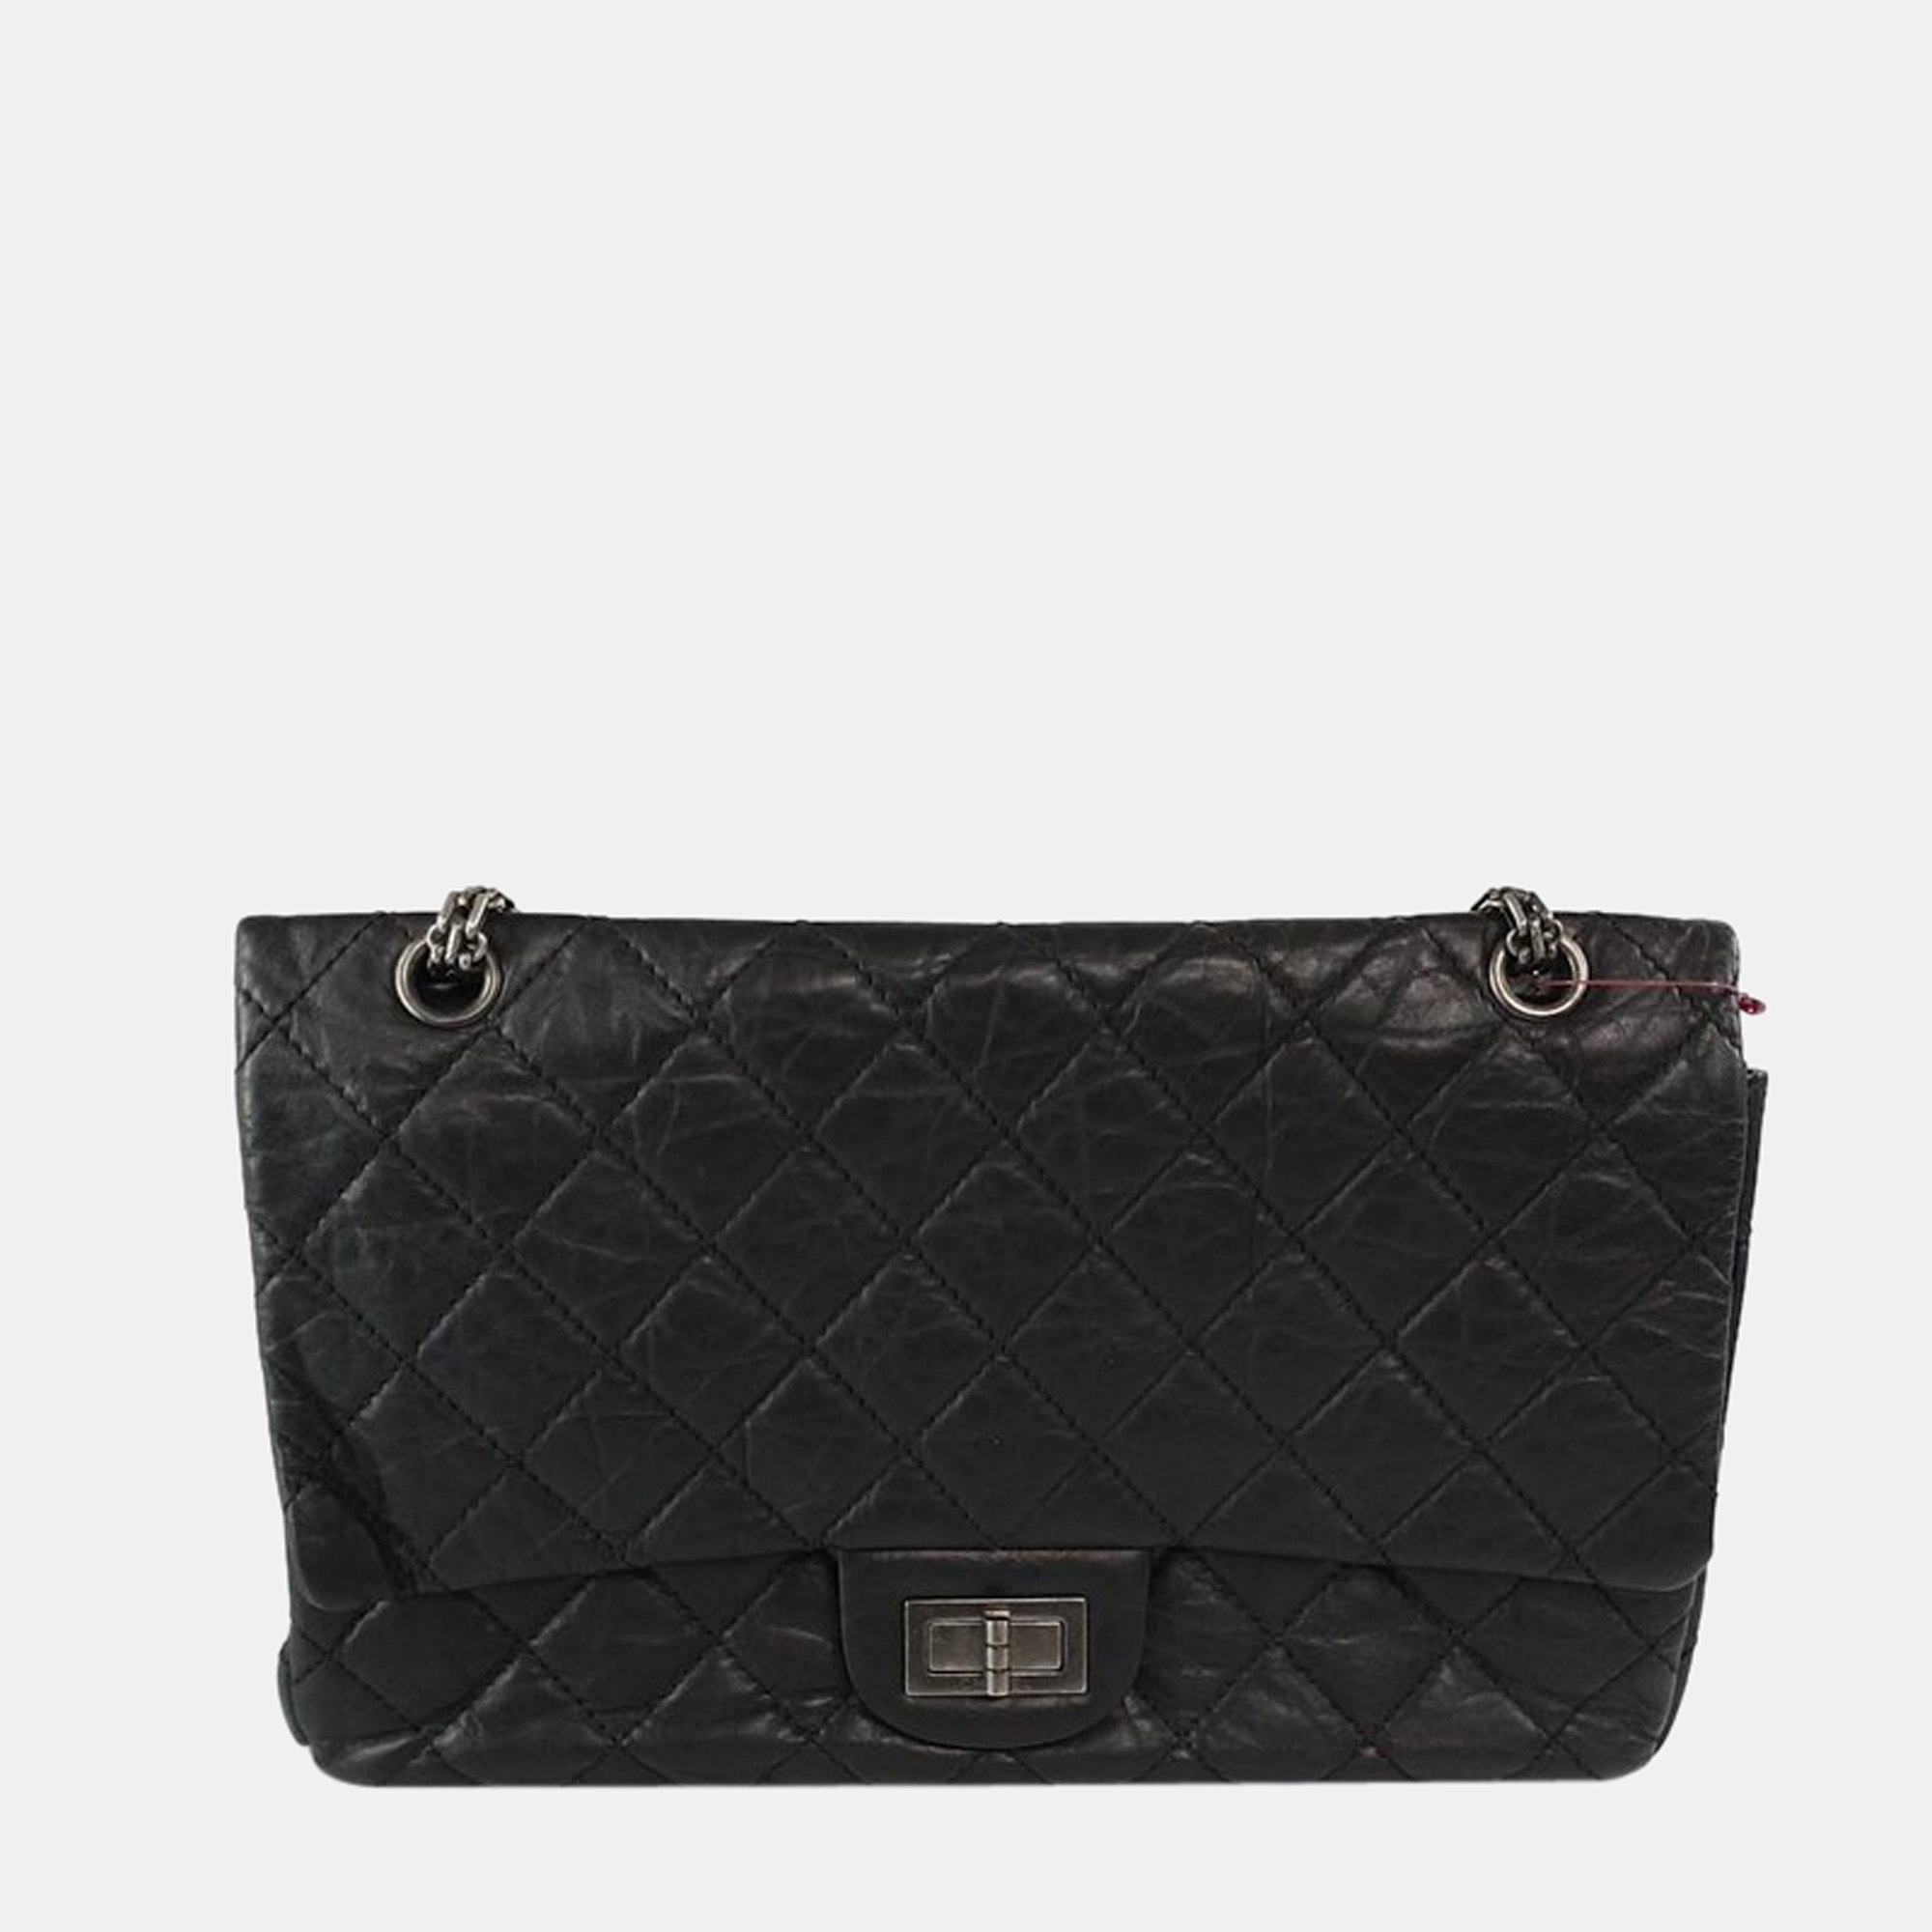 Chanel black leather 2.55 reissue bag